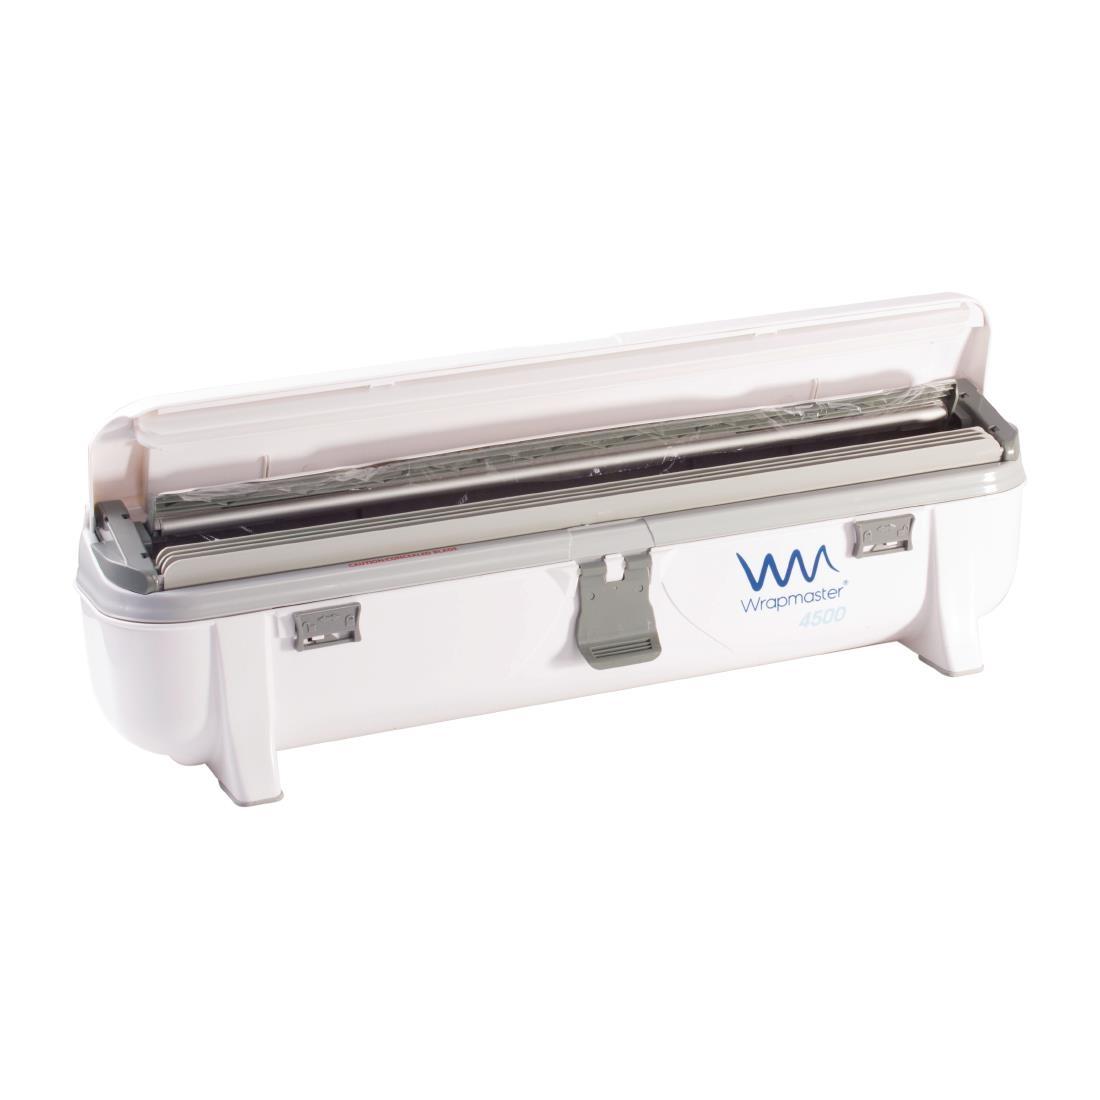 Wrapmaster 4500 Cling Film and Foil Dispenser - M802  - 4